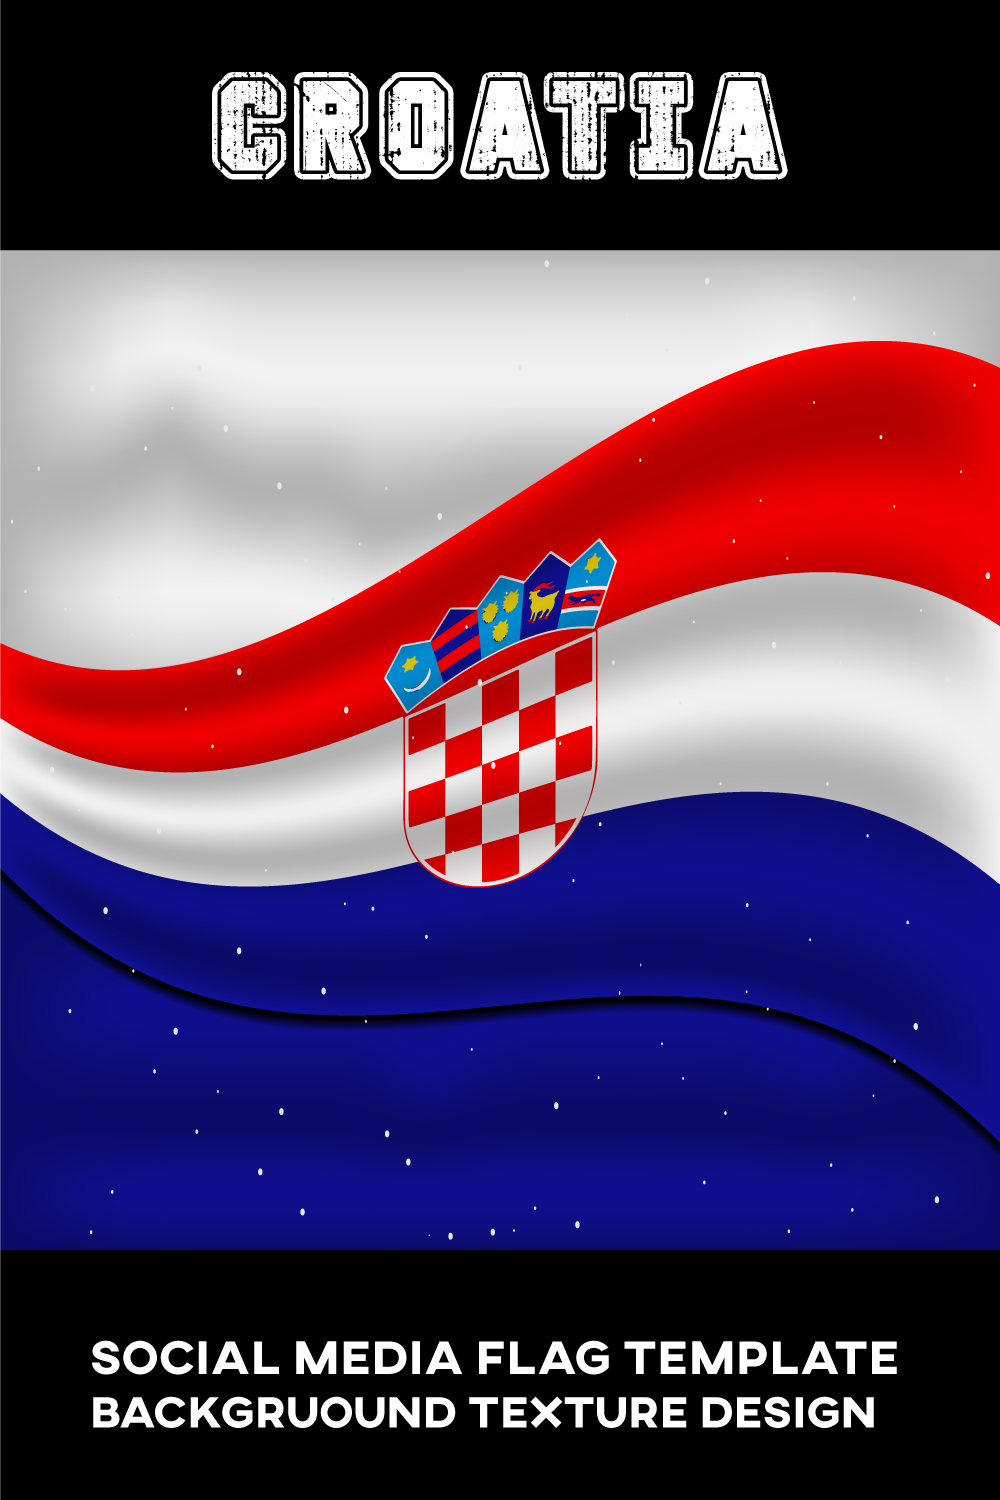 Elegant image of the flag of Croatia.